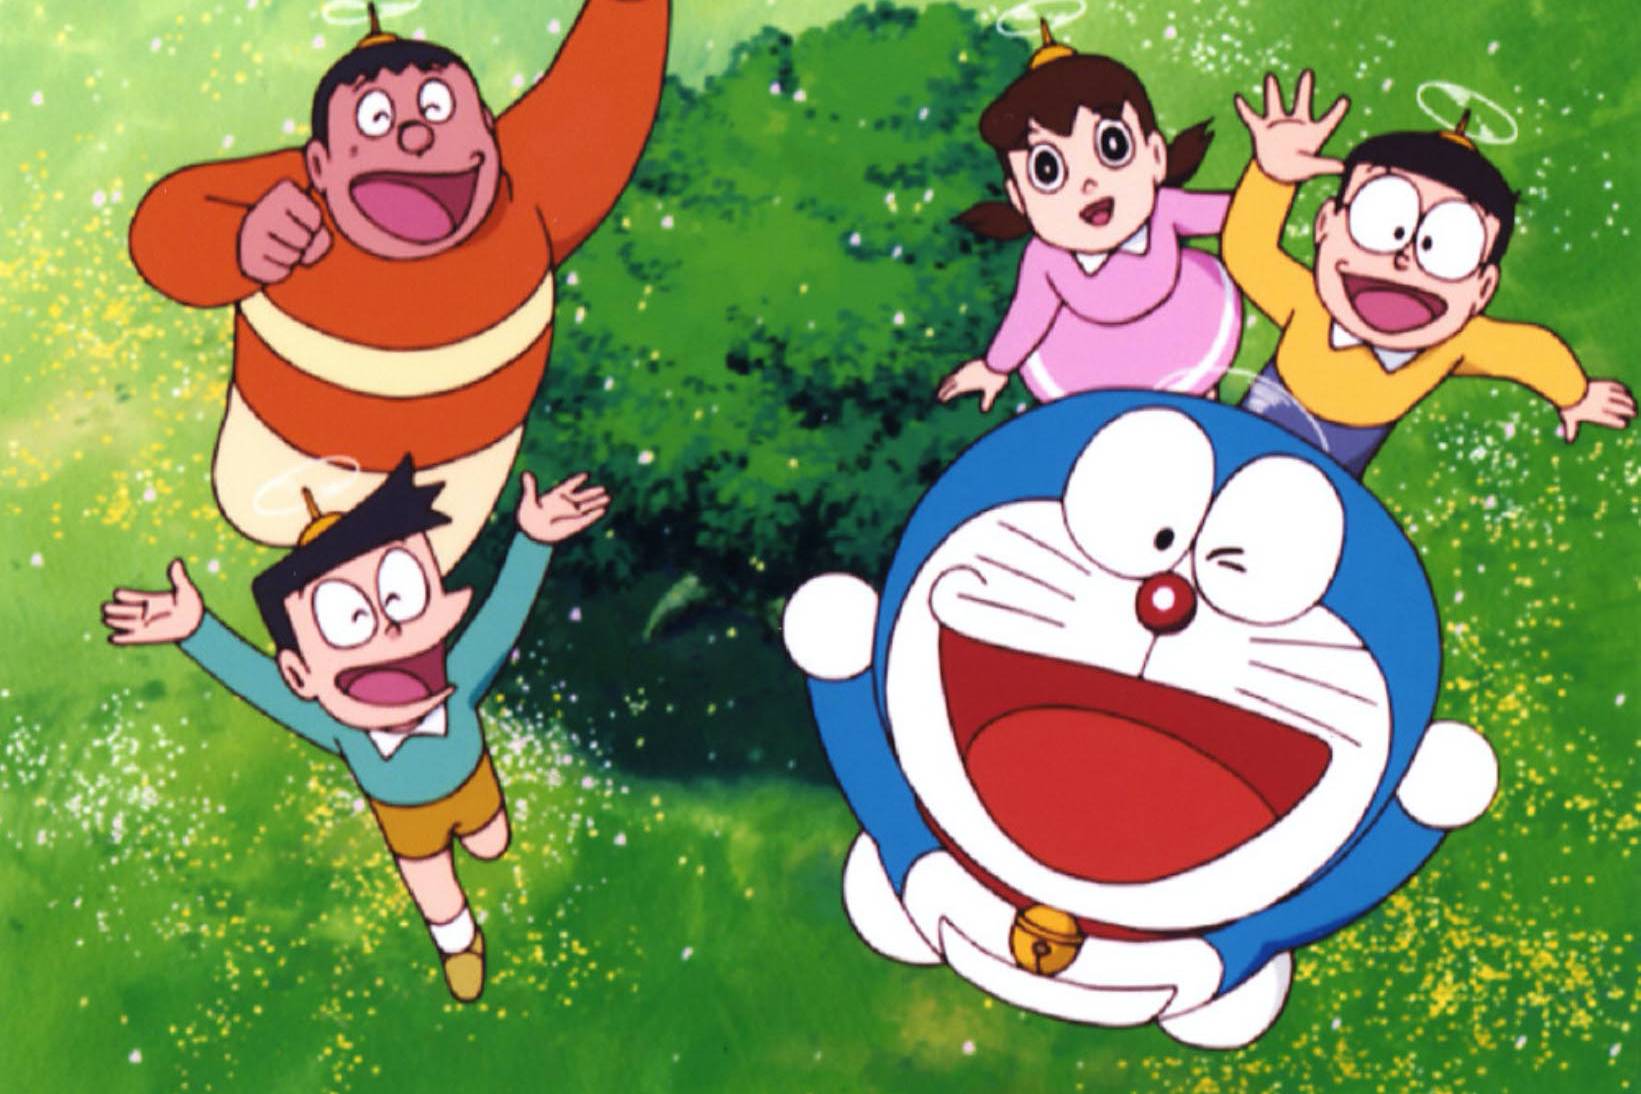 Doraemon co-creator Fujiko Fujio A has died at 88. Source: The Japan Times